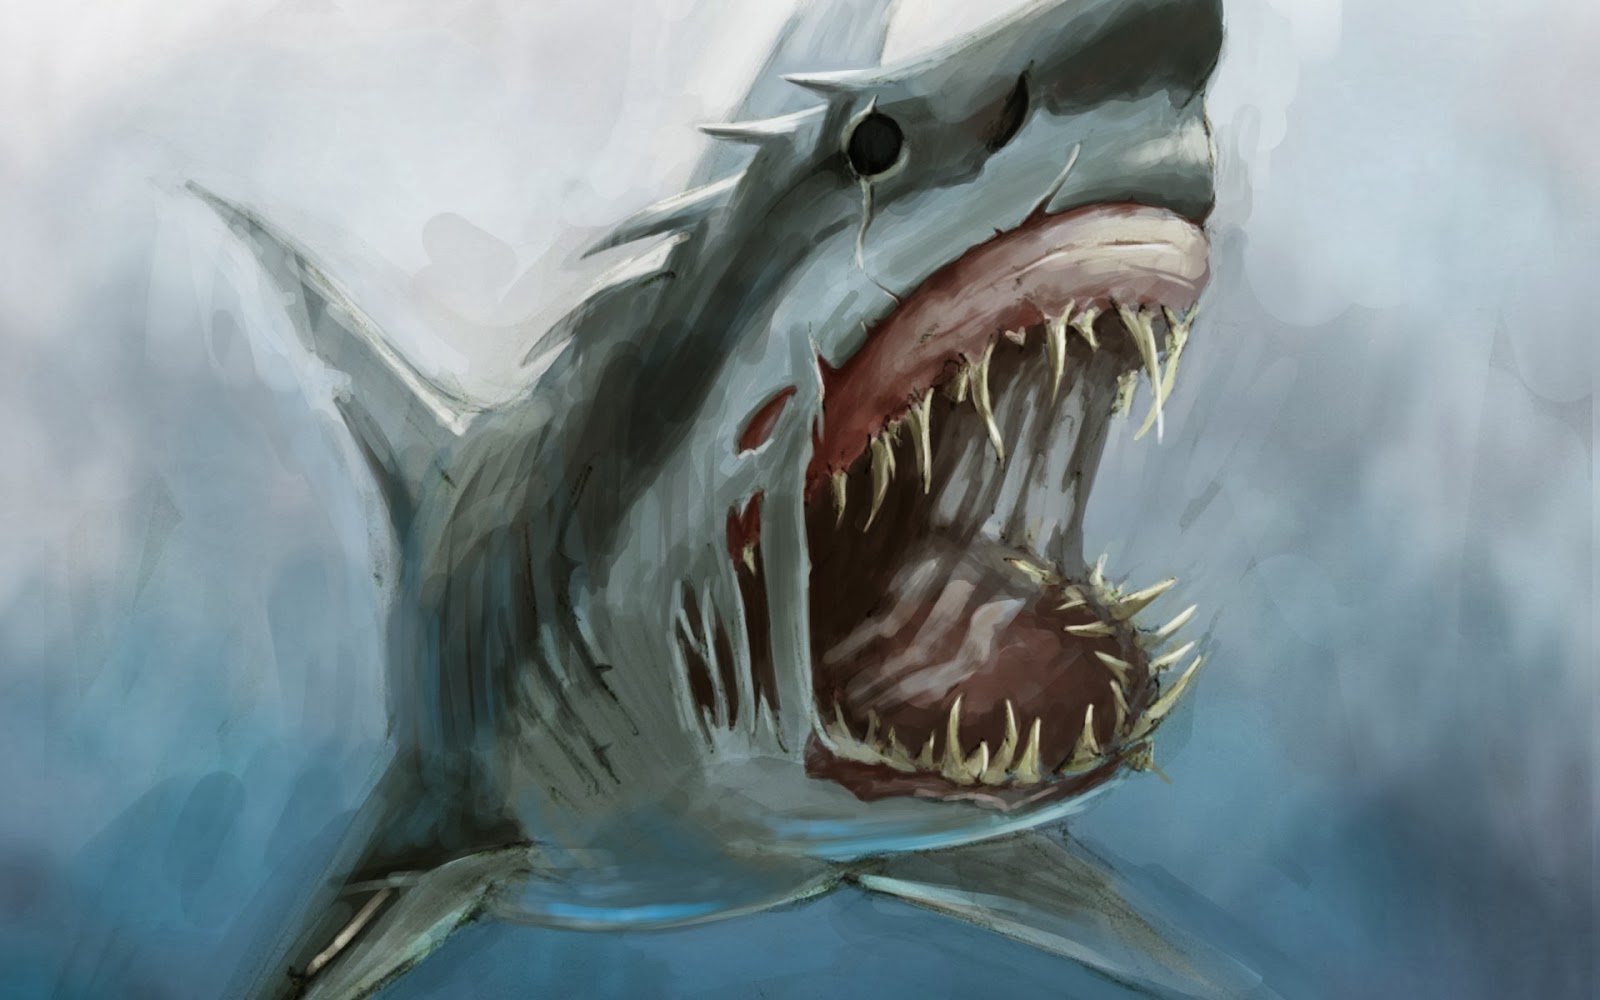 Amazoncom: shark